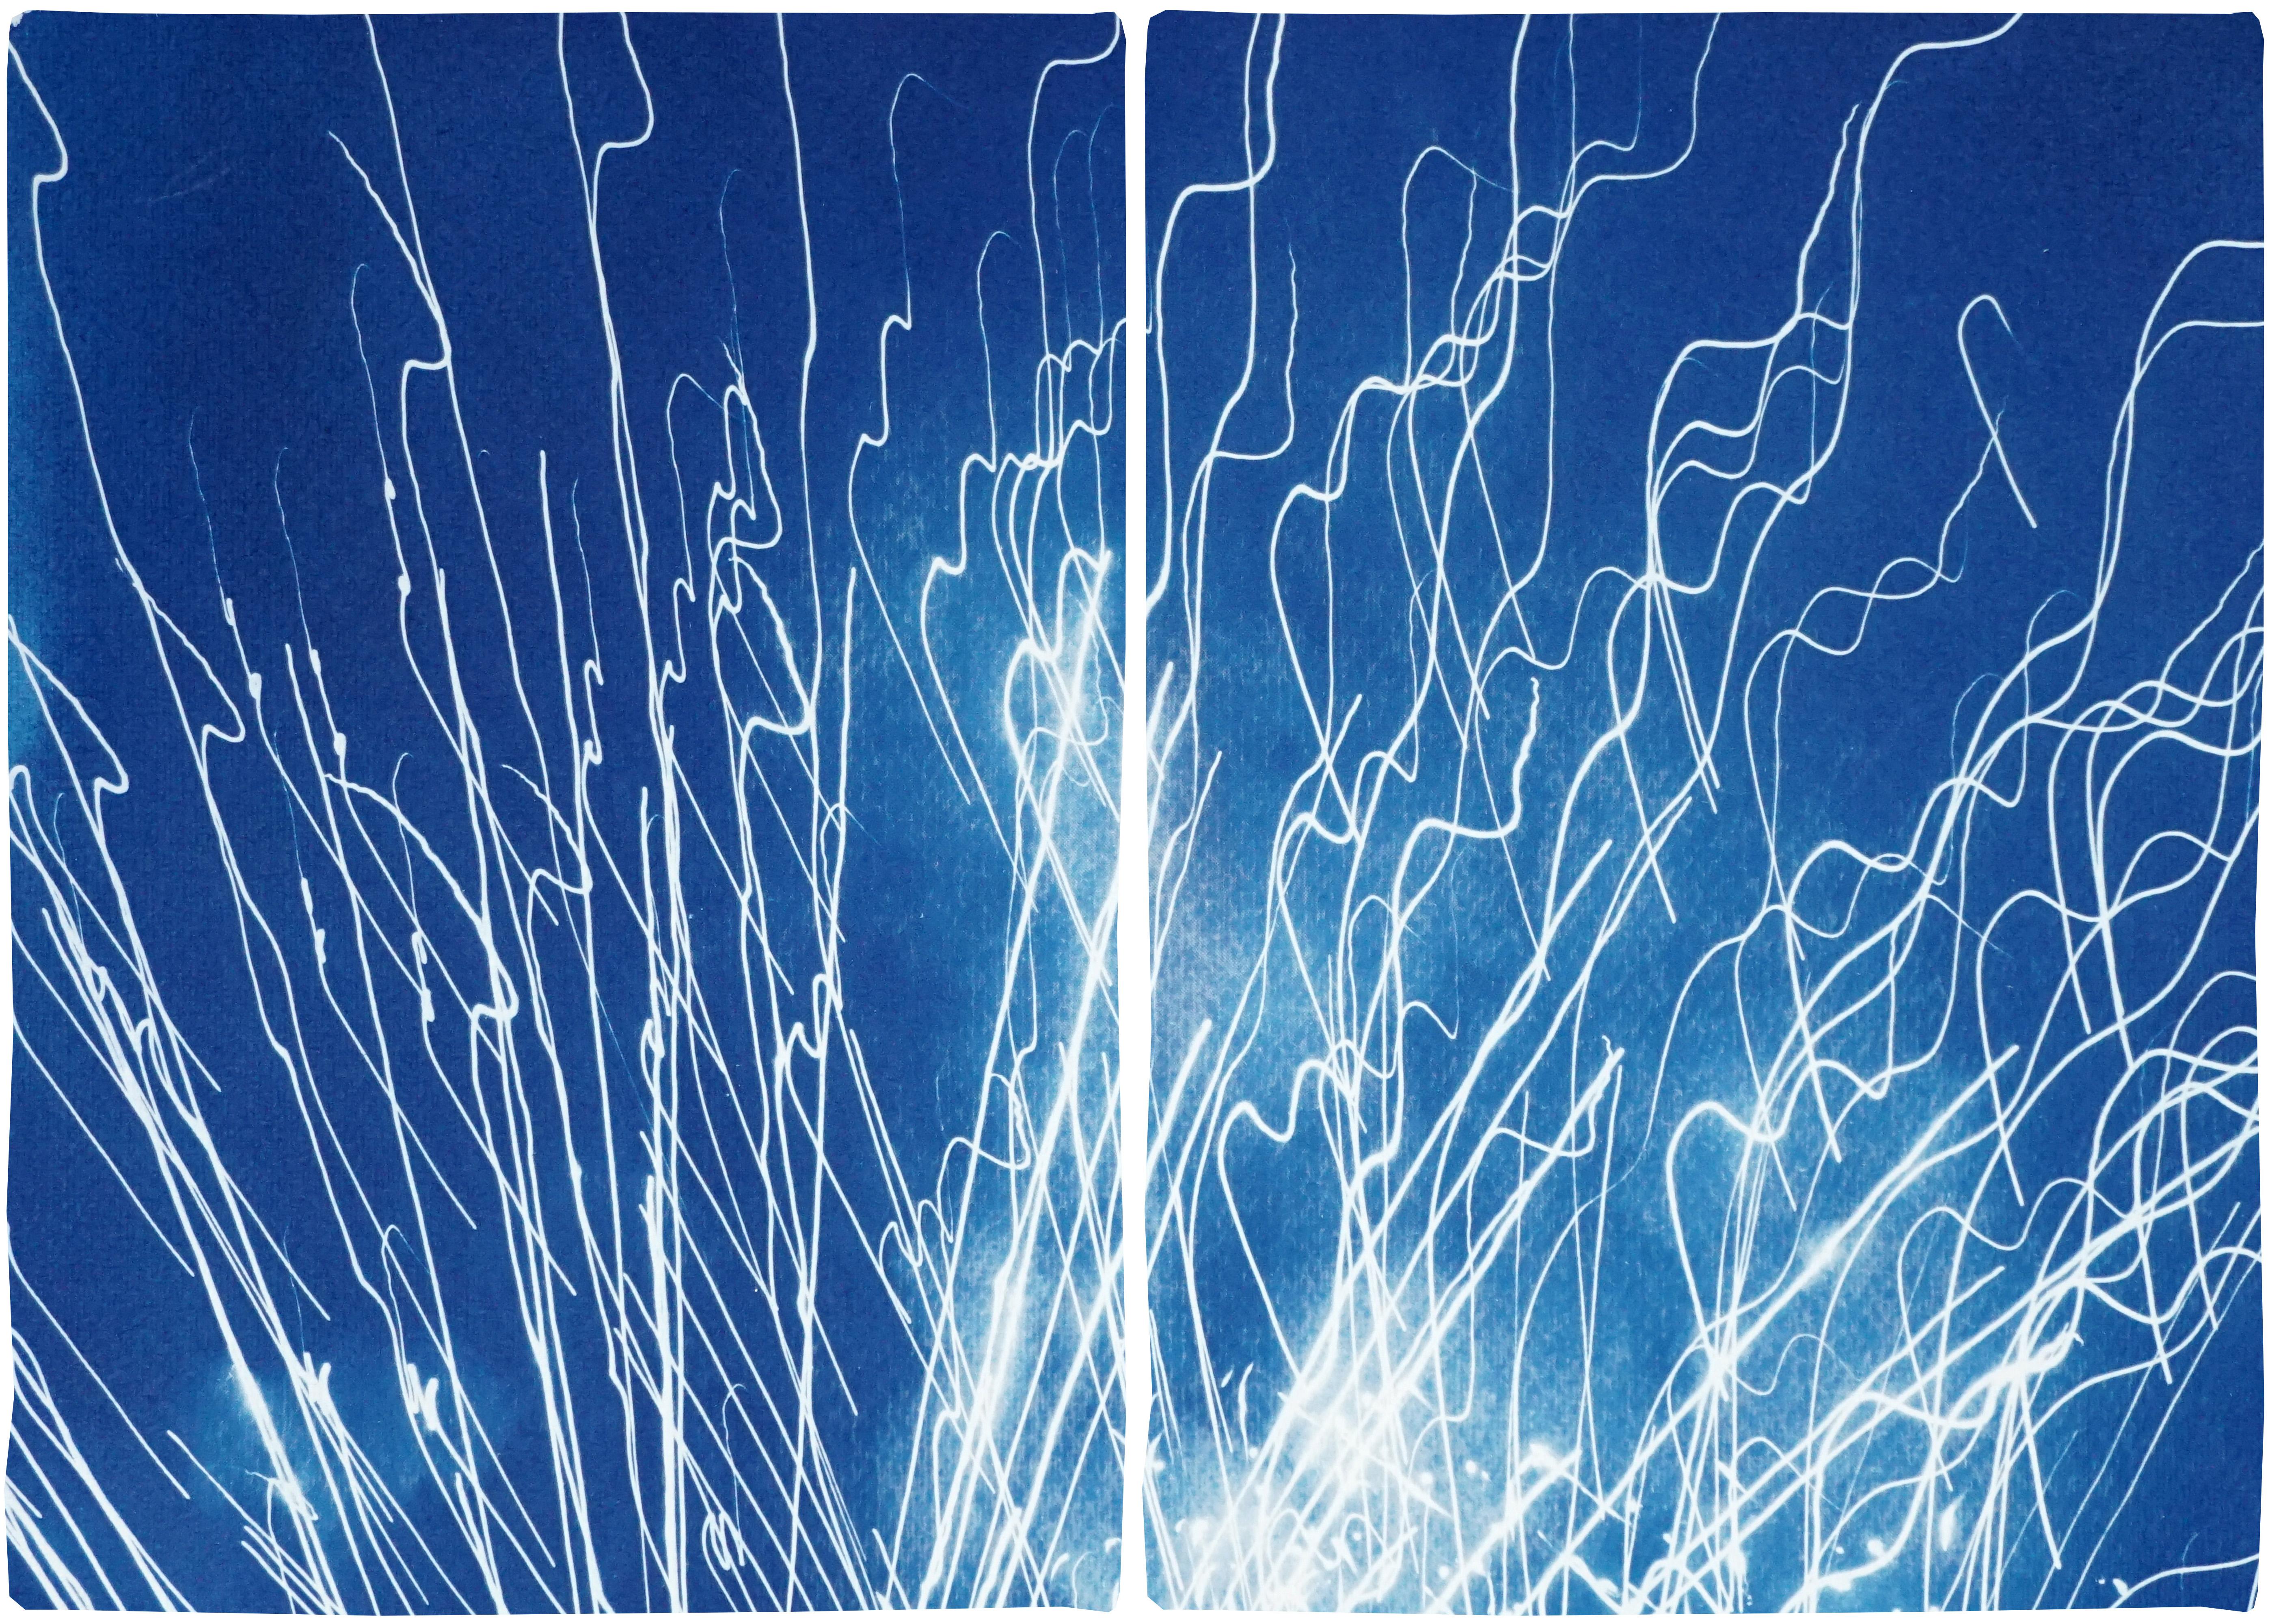 Fireworks Lights in Sky Blue Diptych, Handmade Cyanotype on Watercolor Paper, 